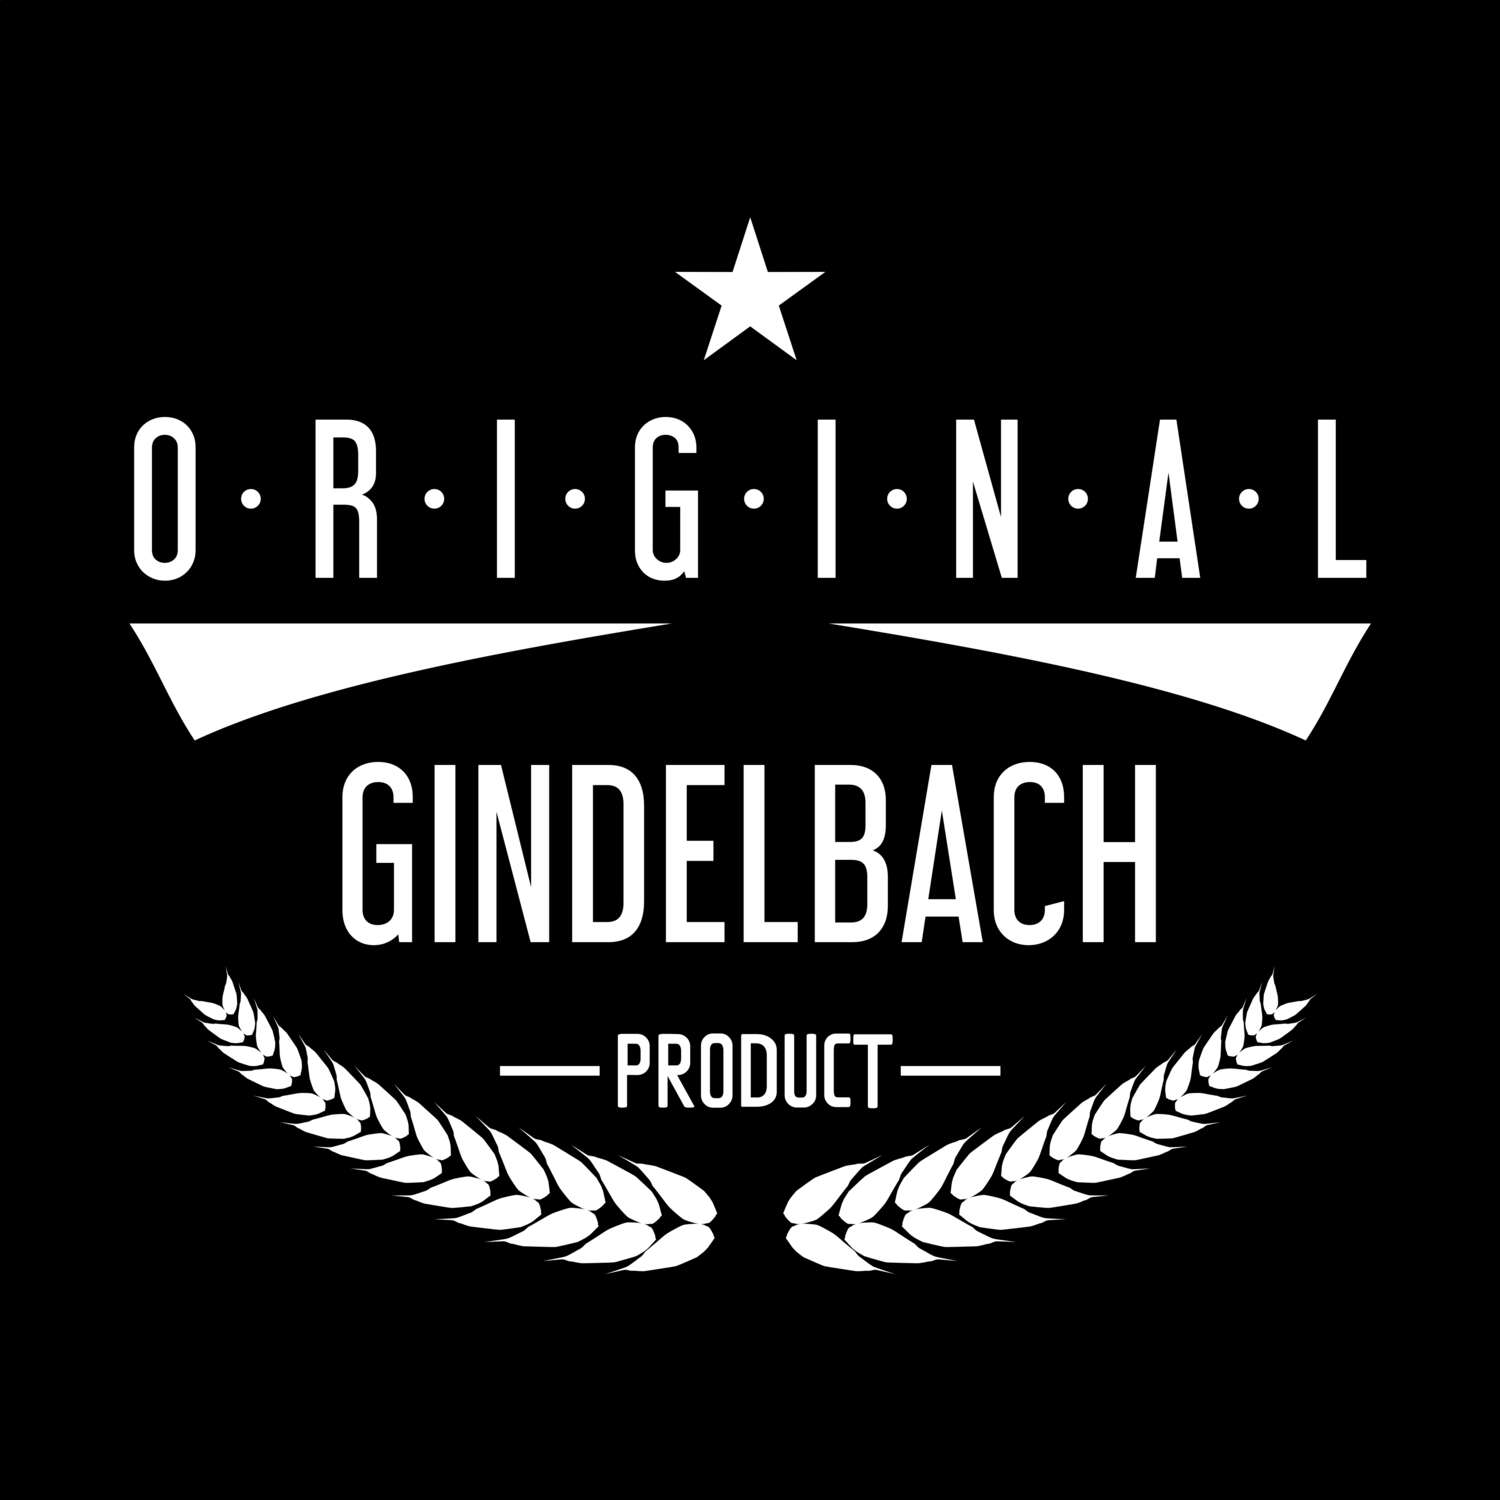 Gindelbach T-Shirt »Original Product«